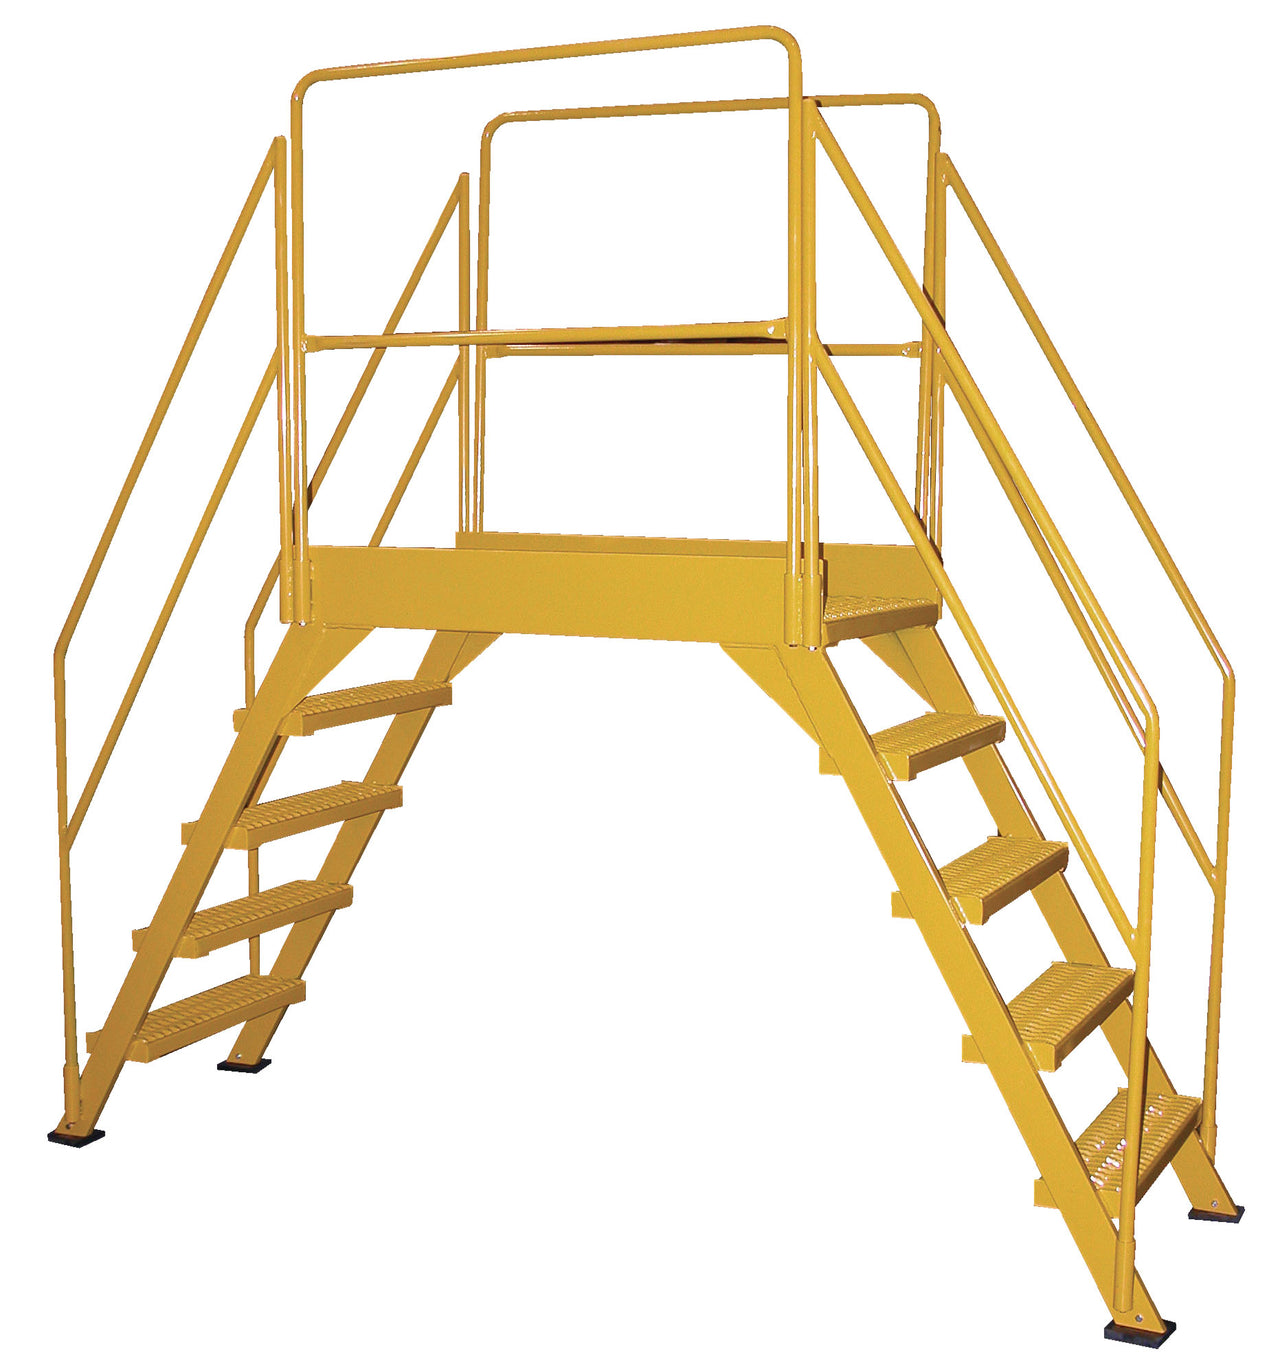 4 Step Cross-Over Ladder w/ 60" Deck